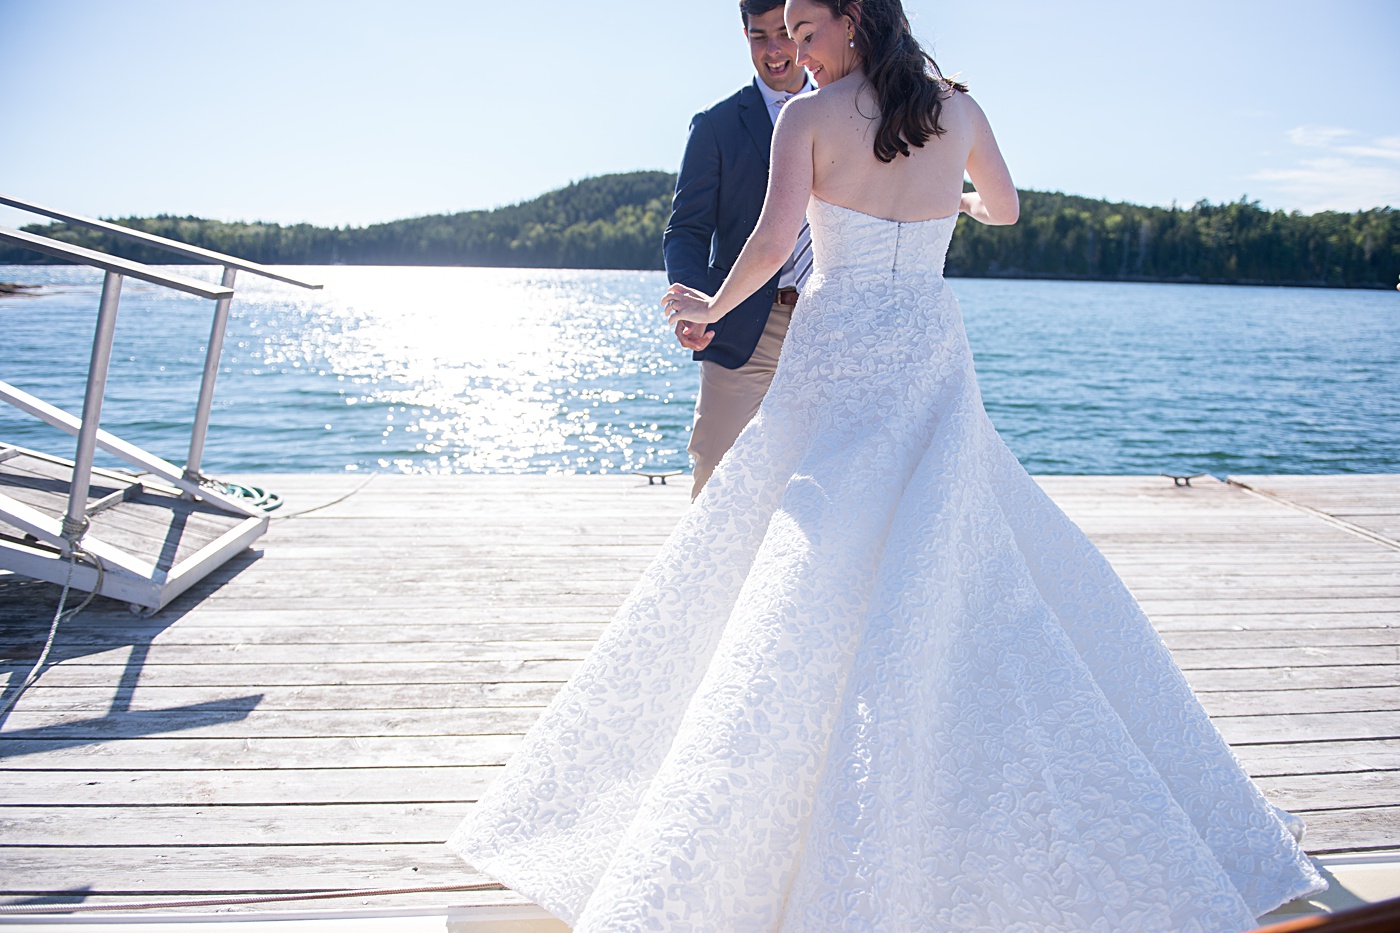 Brooksville Maine wedding by Brea McDonald Photography